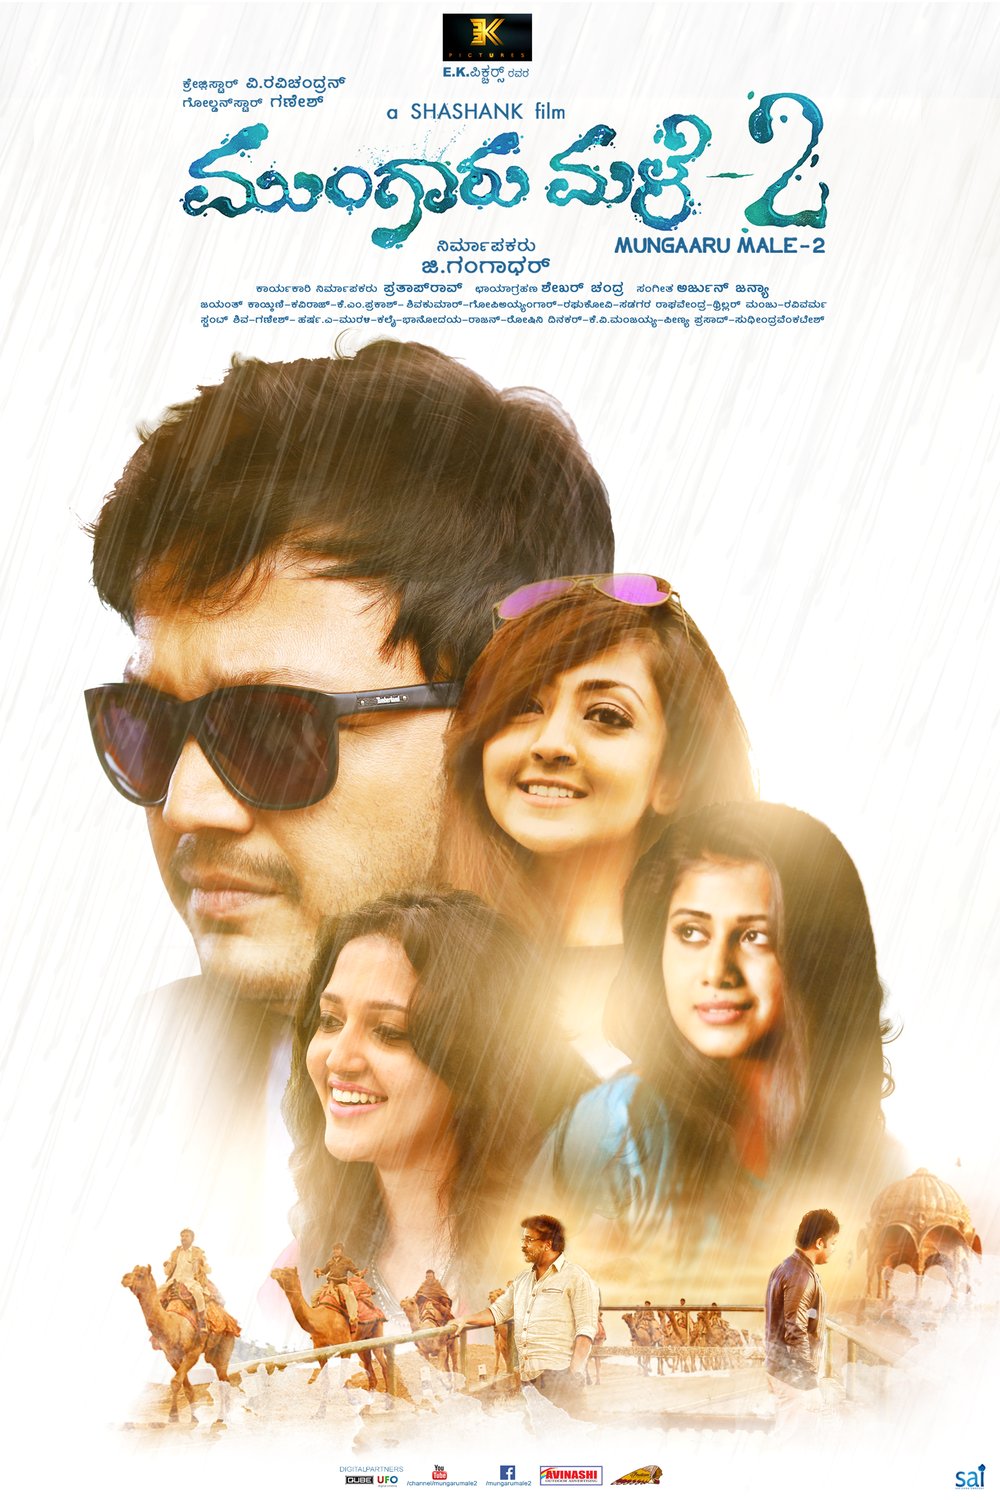 Kannada poster of the movie Mungaru Male 2